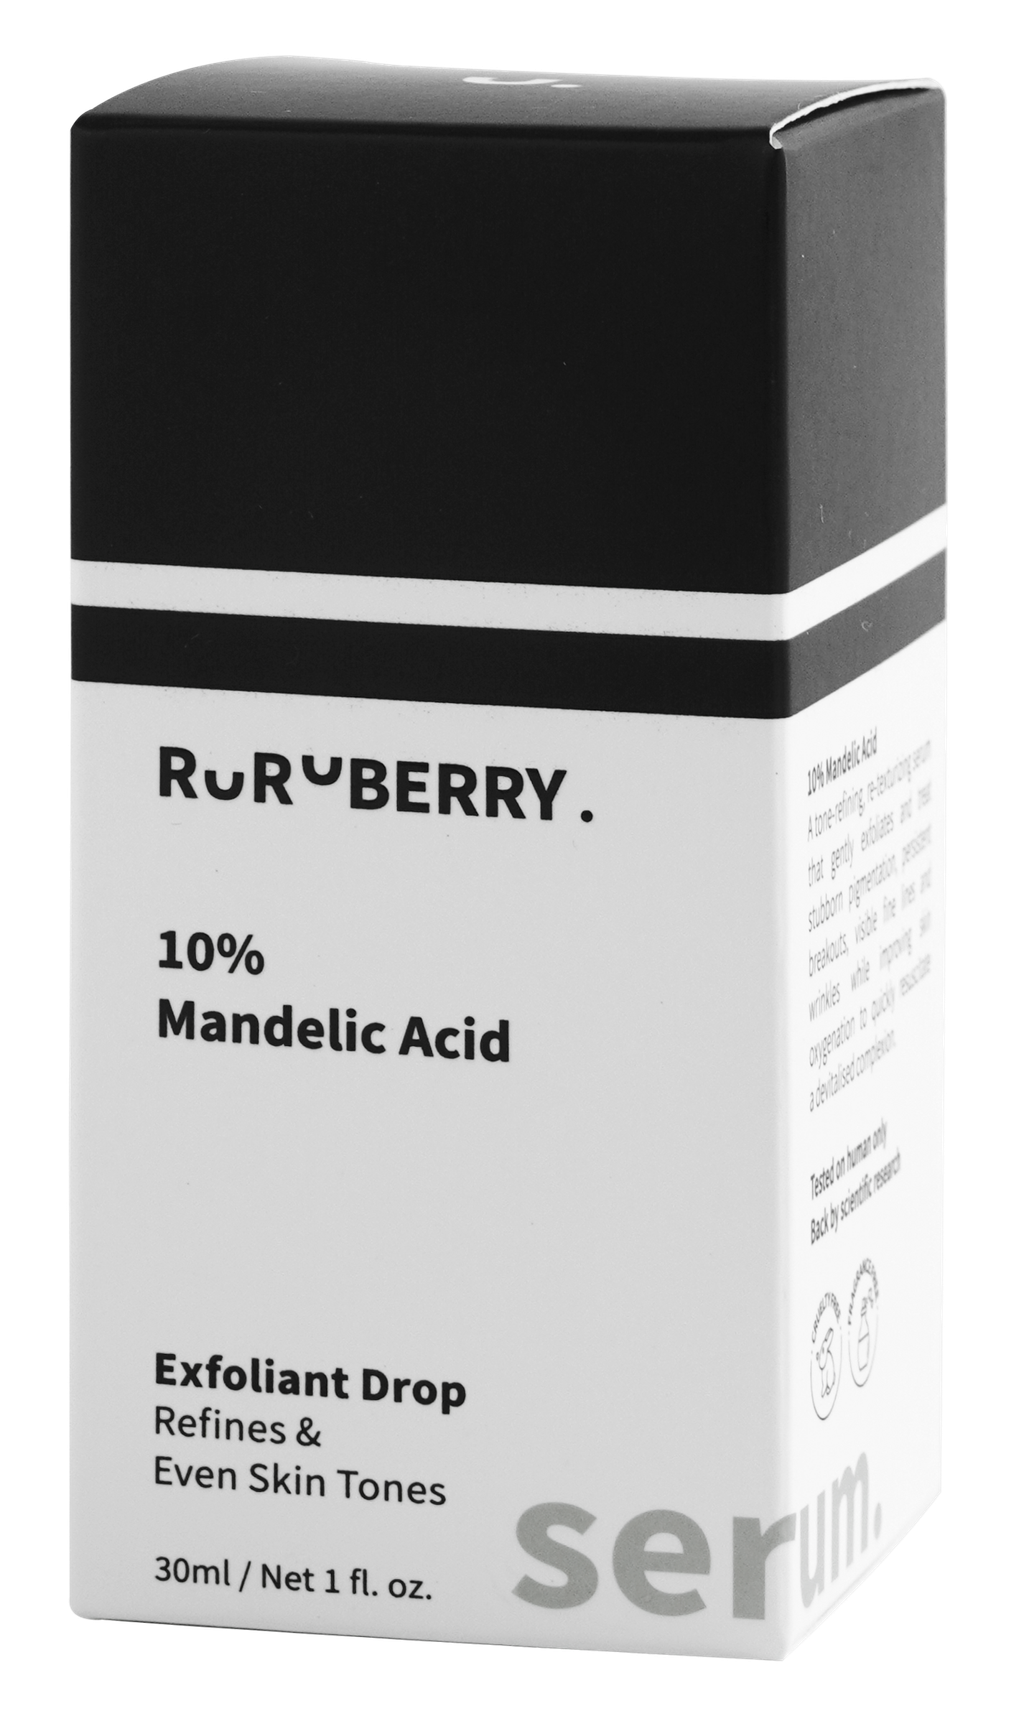 10% Mandelic Acid Box